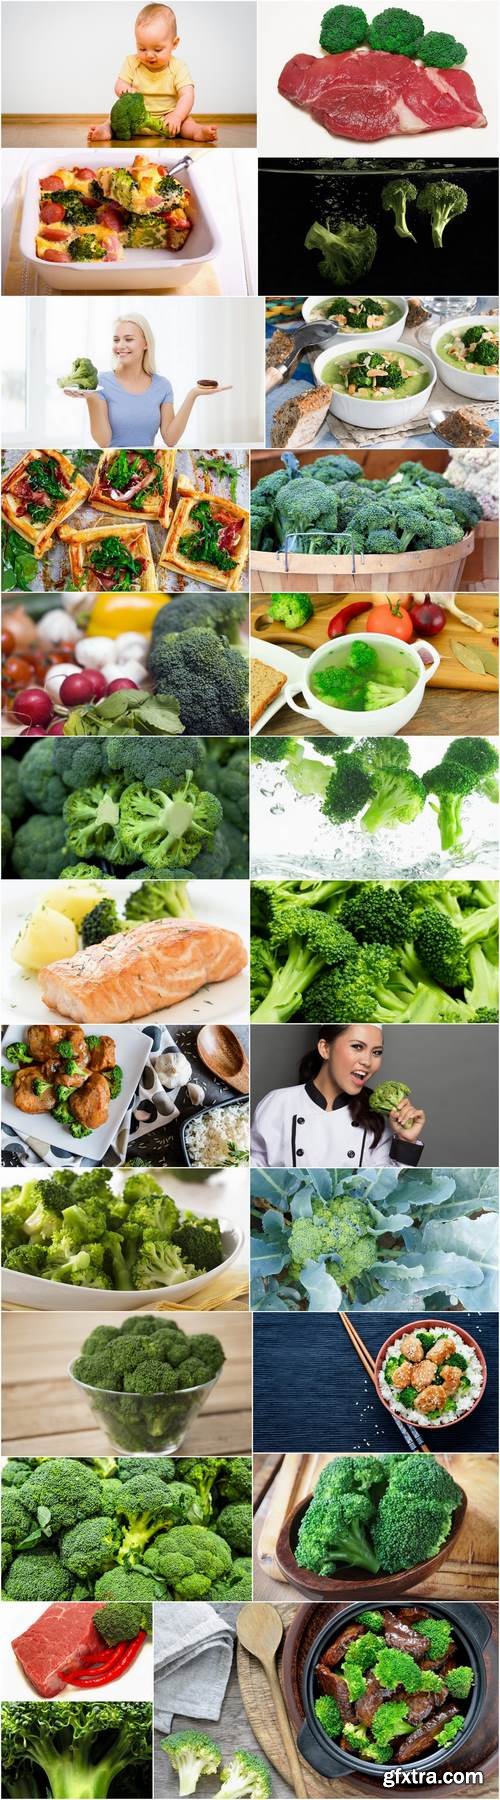 Broccoli cabbage food meal dish 25 HQ Jpeg